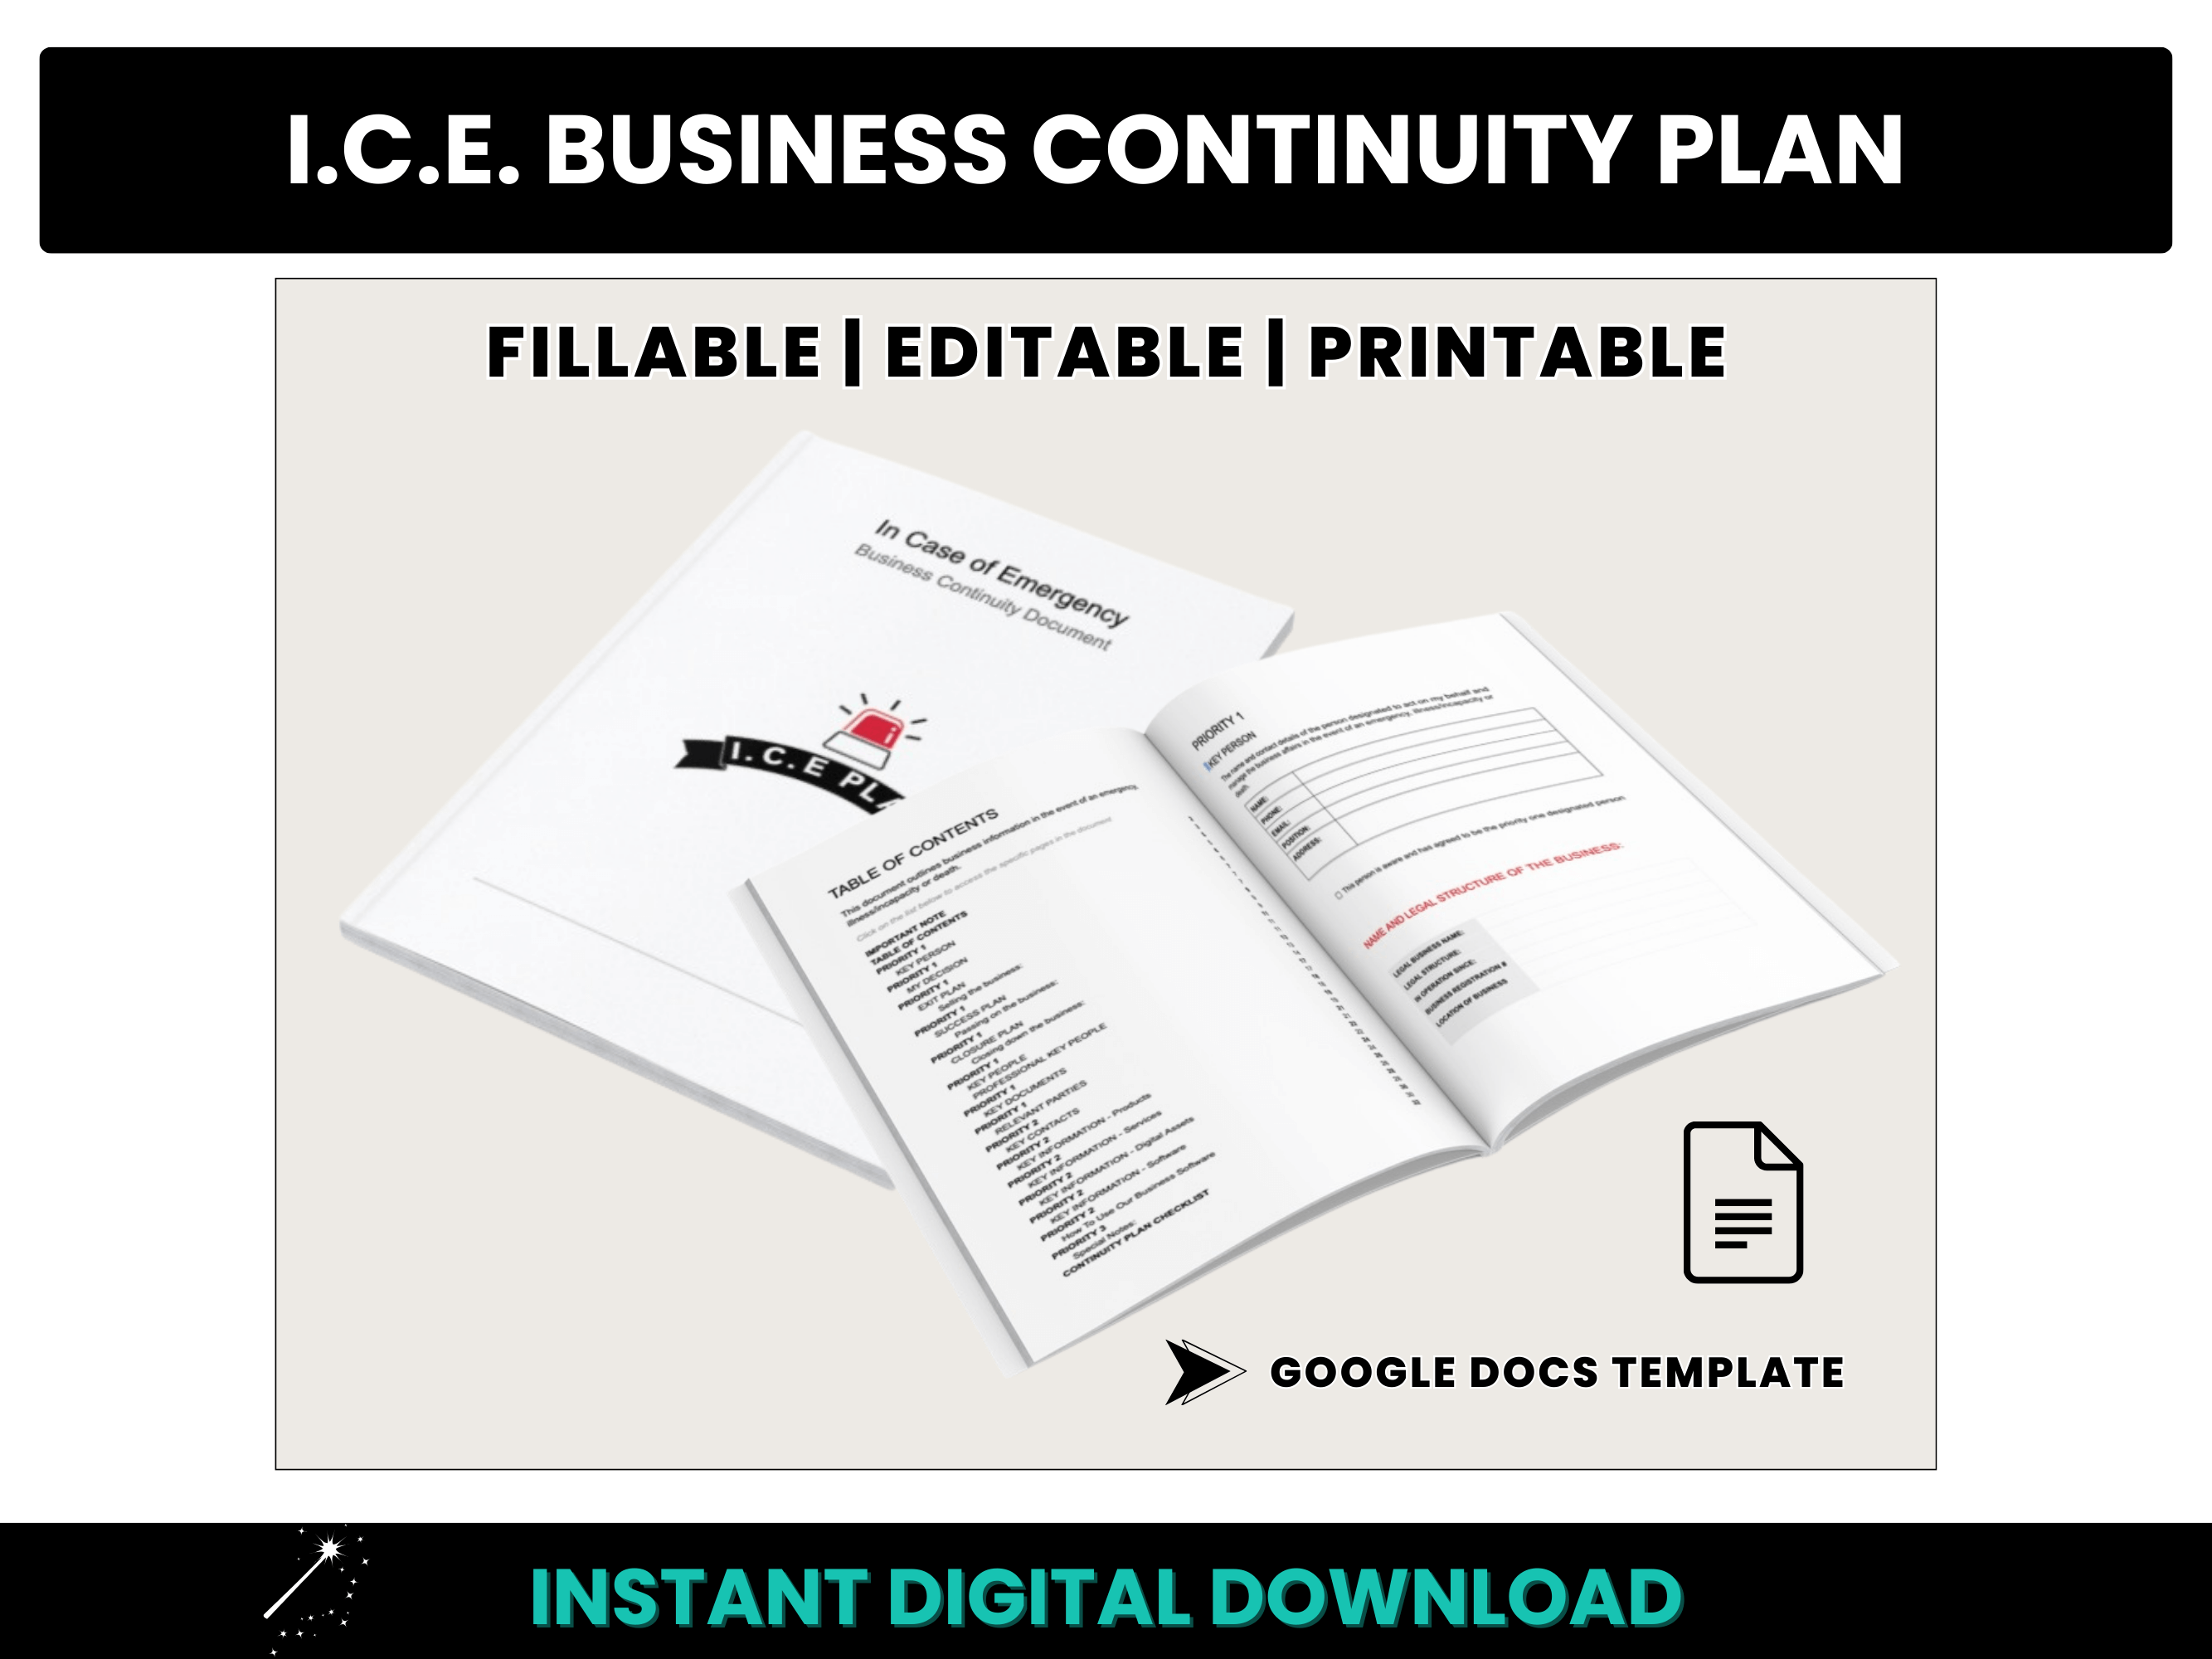 ICE Business Continuity Plan - Google Docs Template